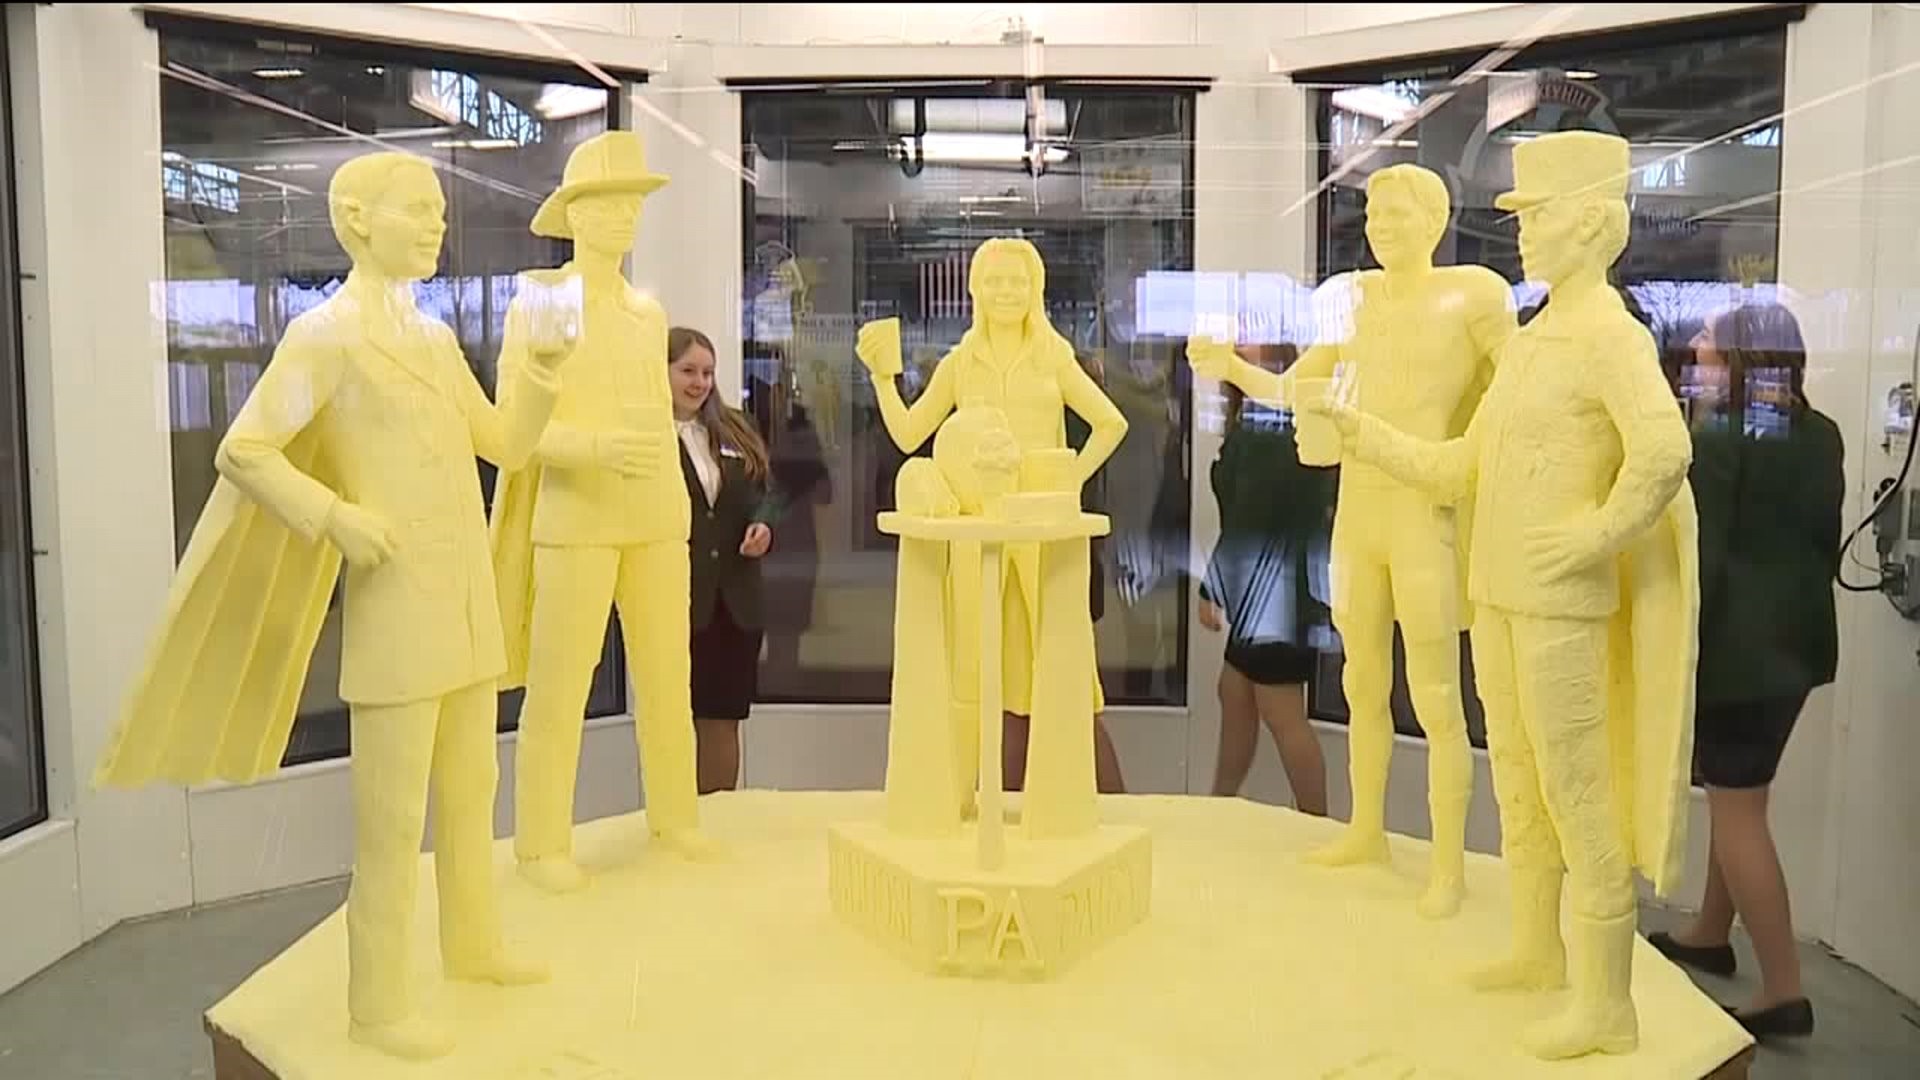 Butter Sculpture Unveiled at Pennsylvania Farm Show